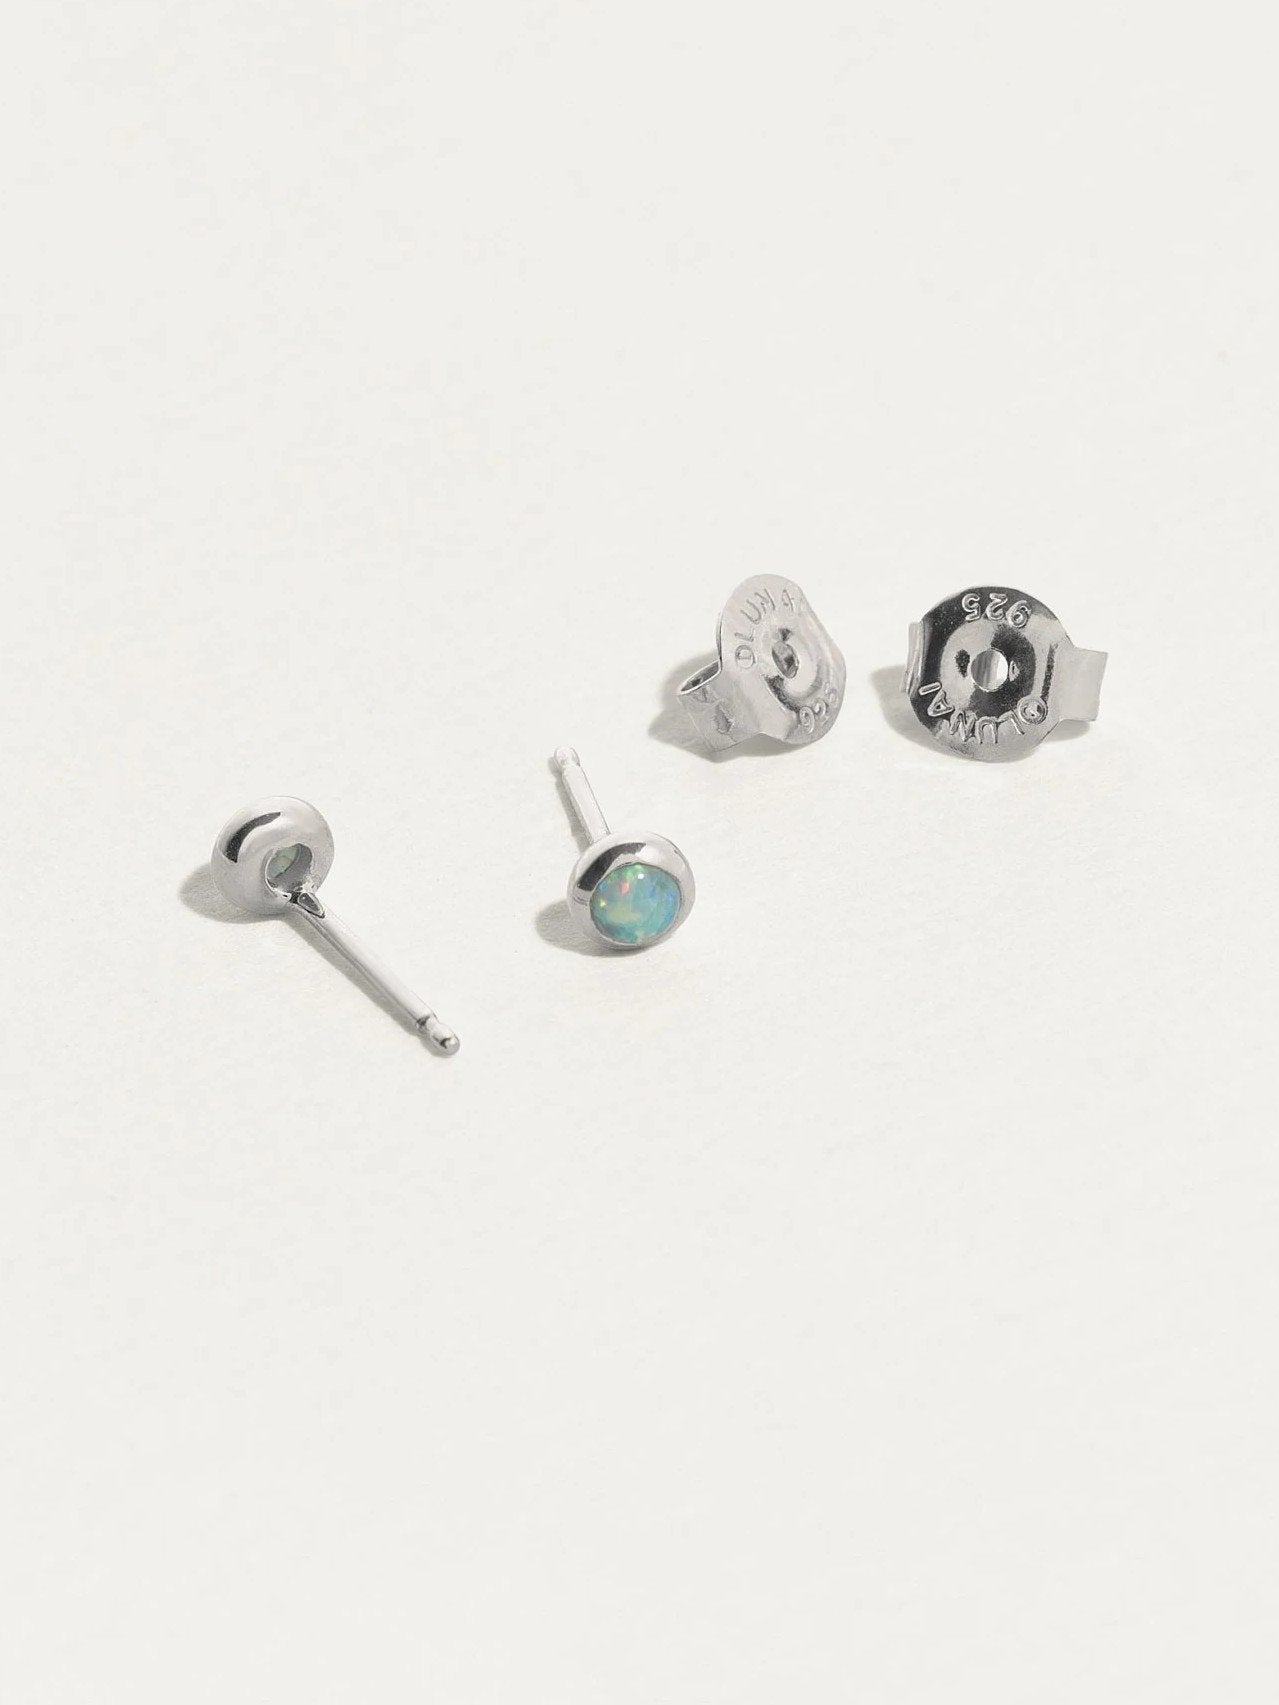 Therese Opal Stud Earrings - 925 Sterling SilverBackUpItemsBirthstone GiftLunai Jewelry